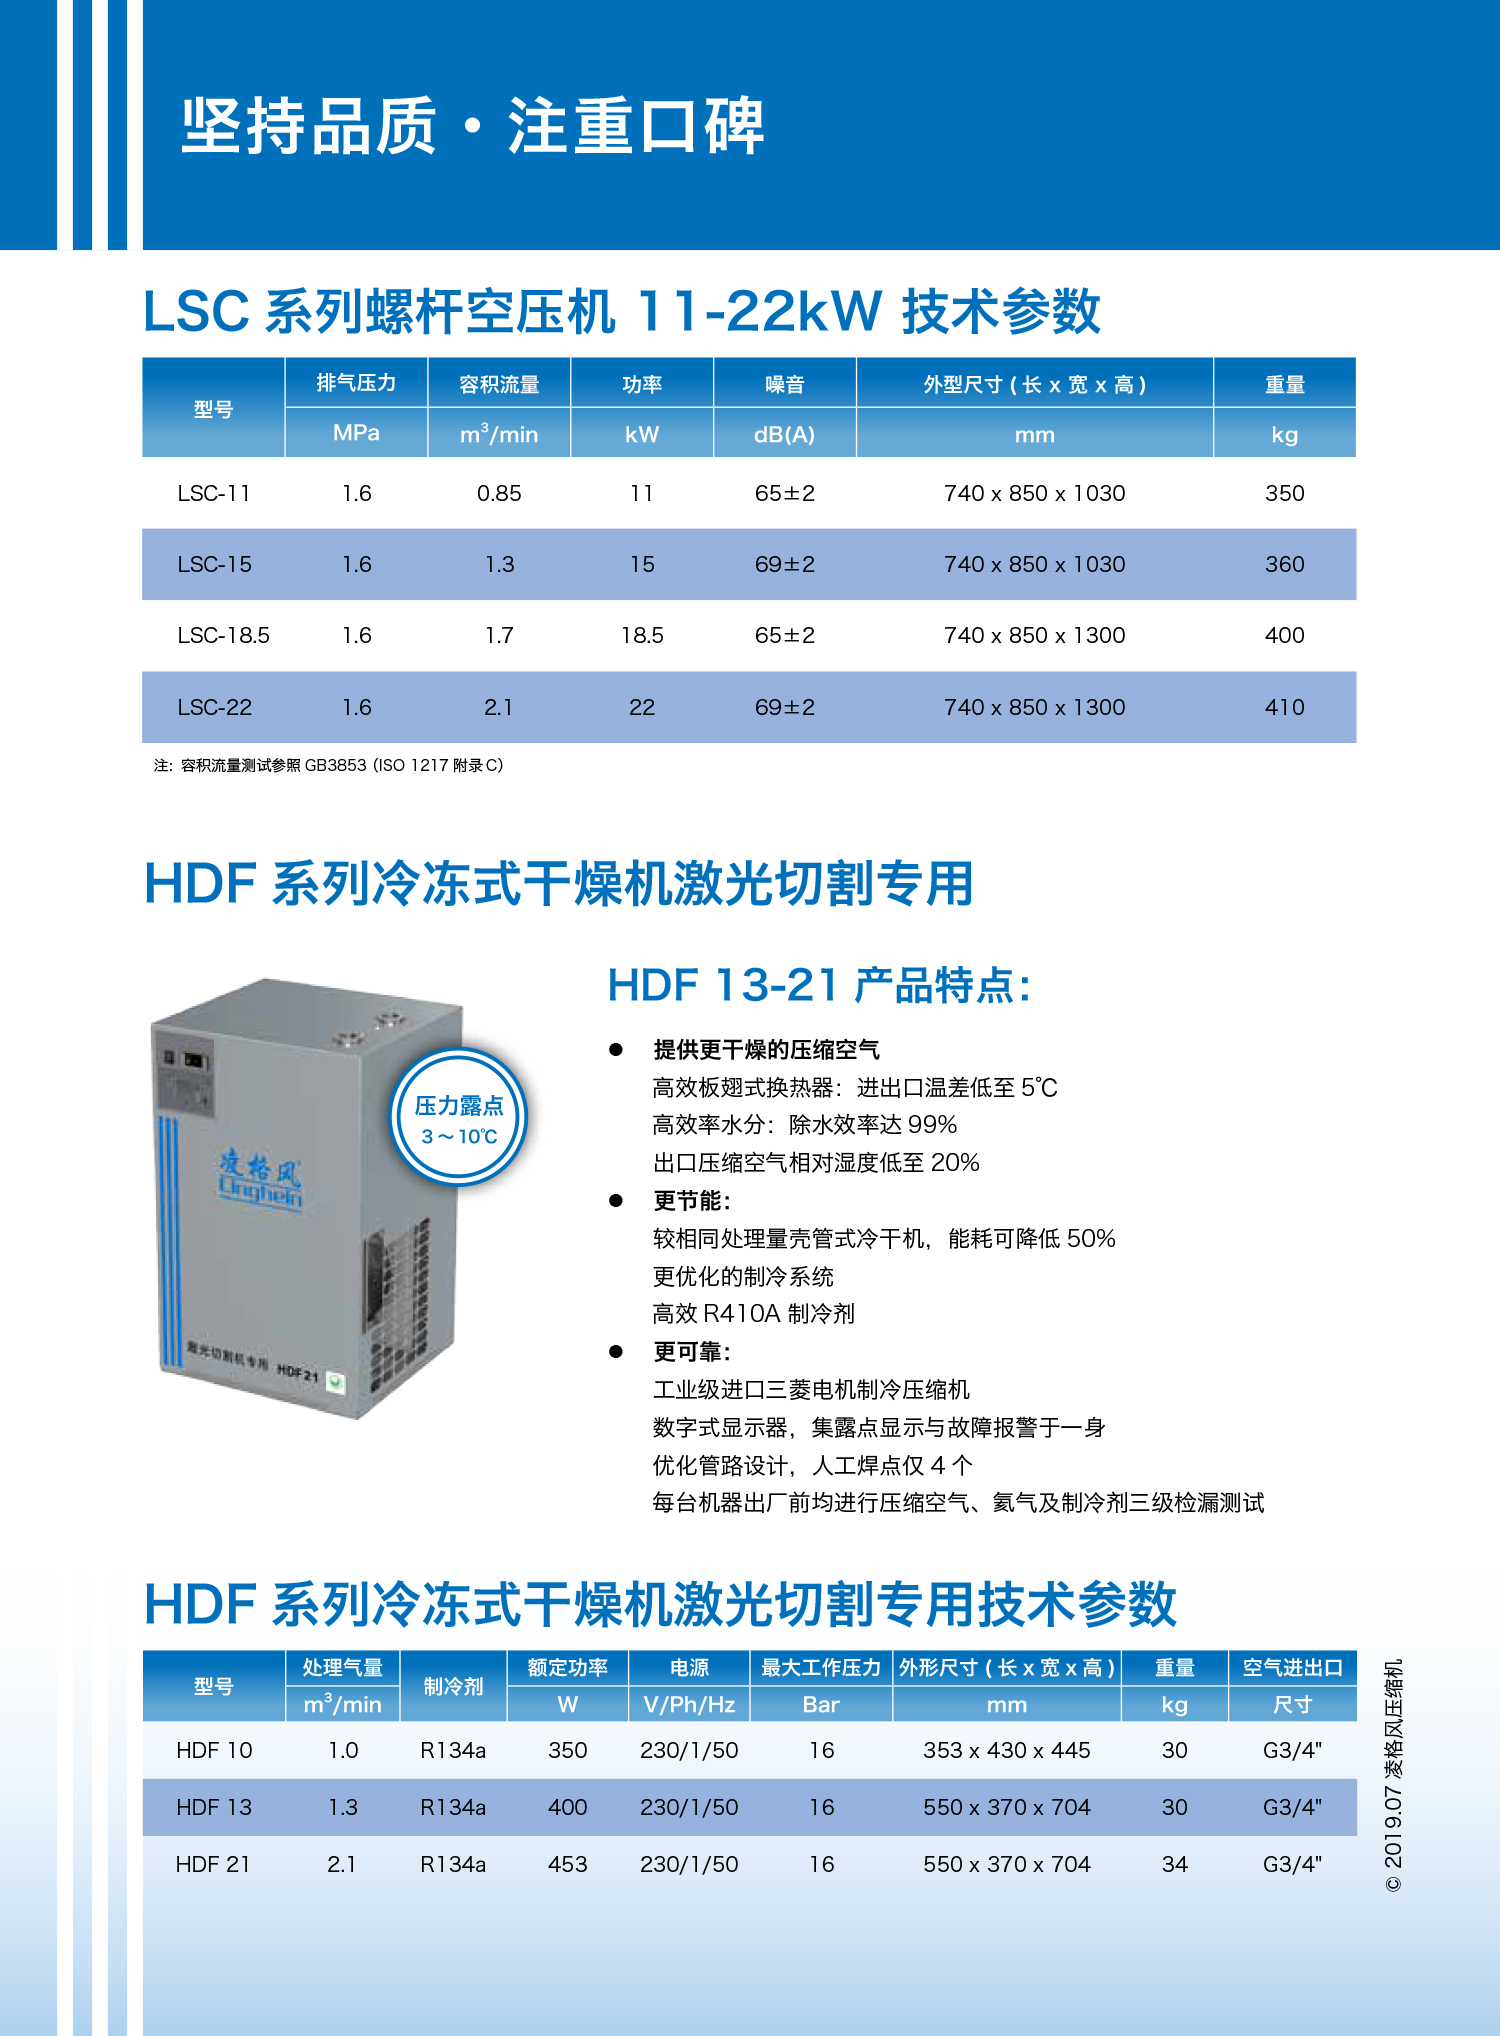 LSC激光切割专用空压机产品宣传册_201907-2.jpg